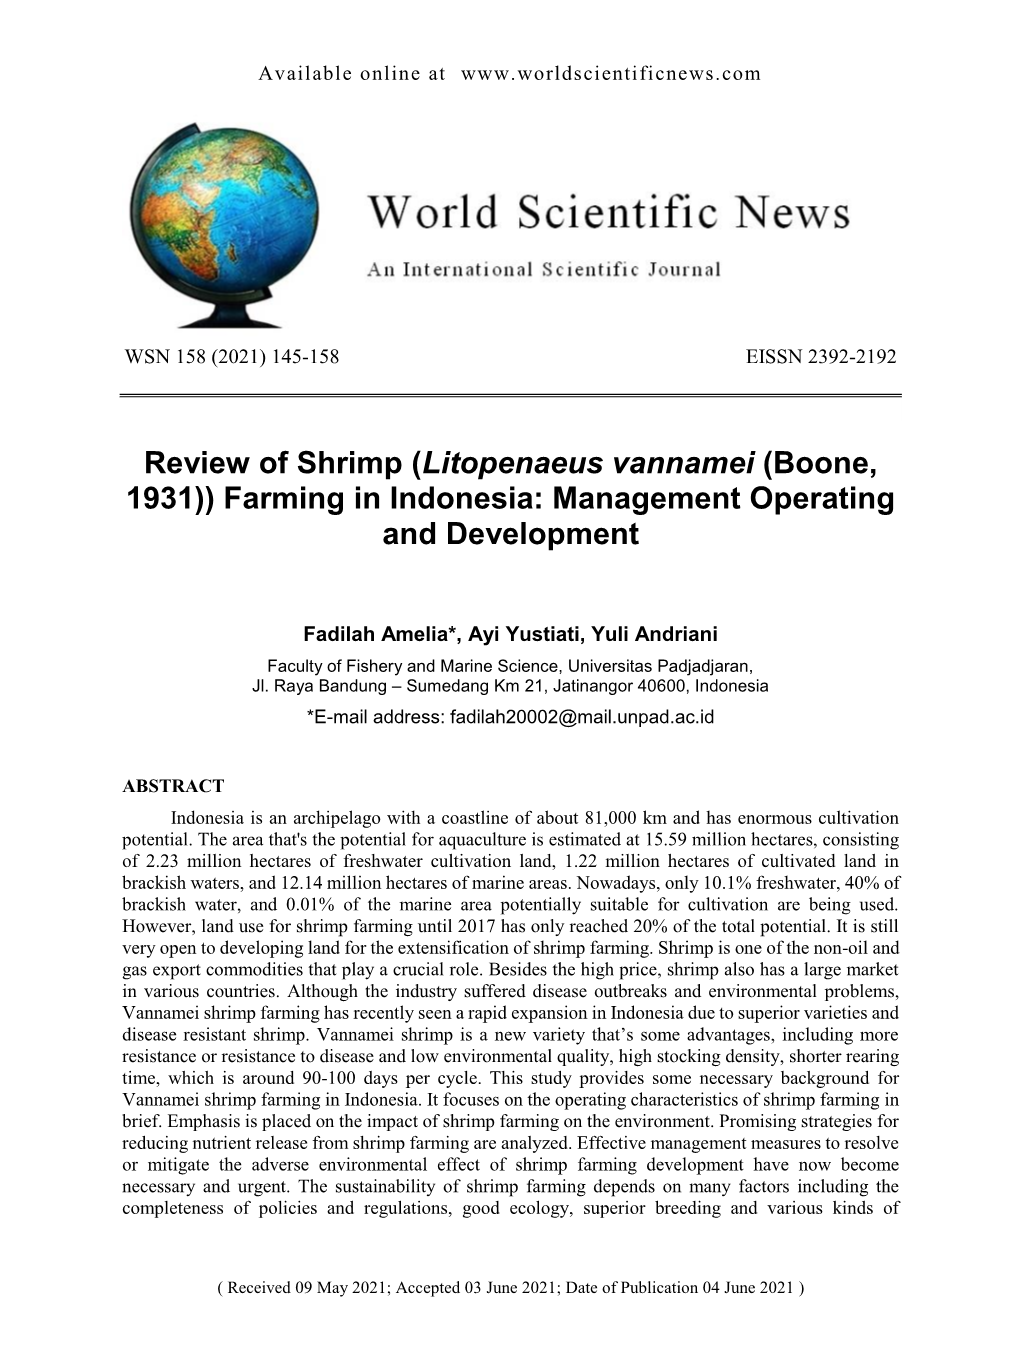 (Litopenaeus Vannamei (Boone, 1931)) Farming in Indonesia: Management Operating and Development